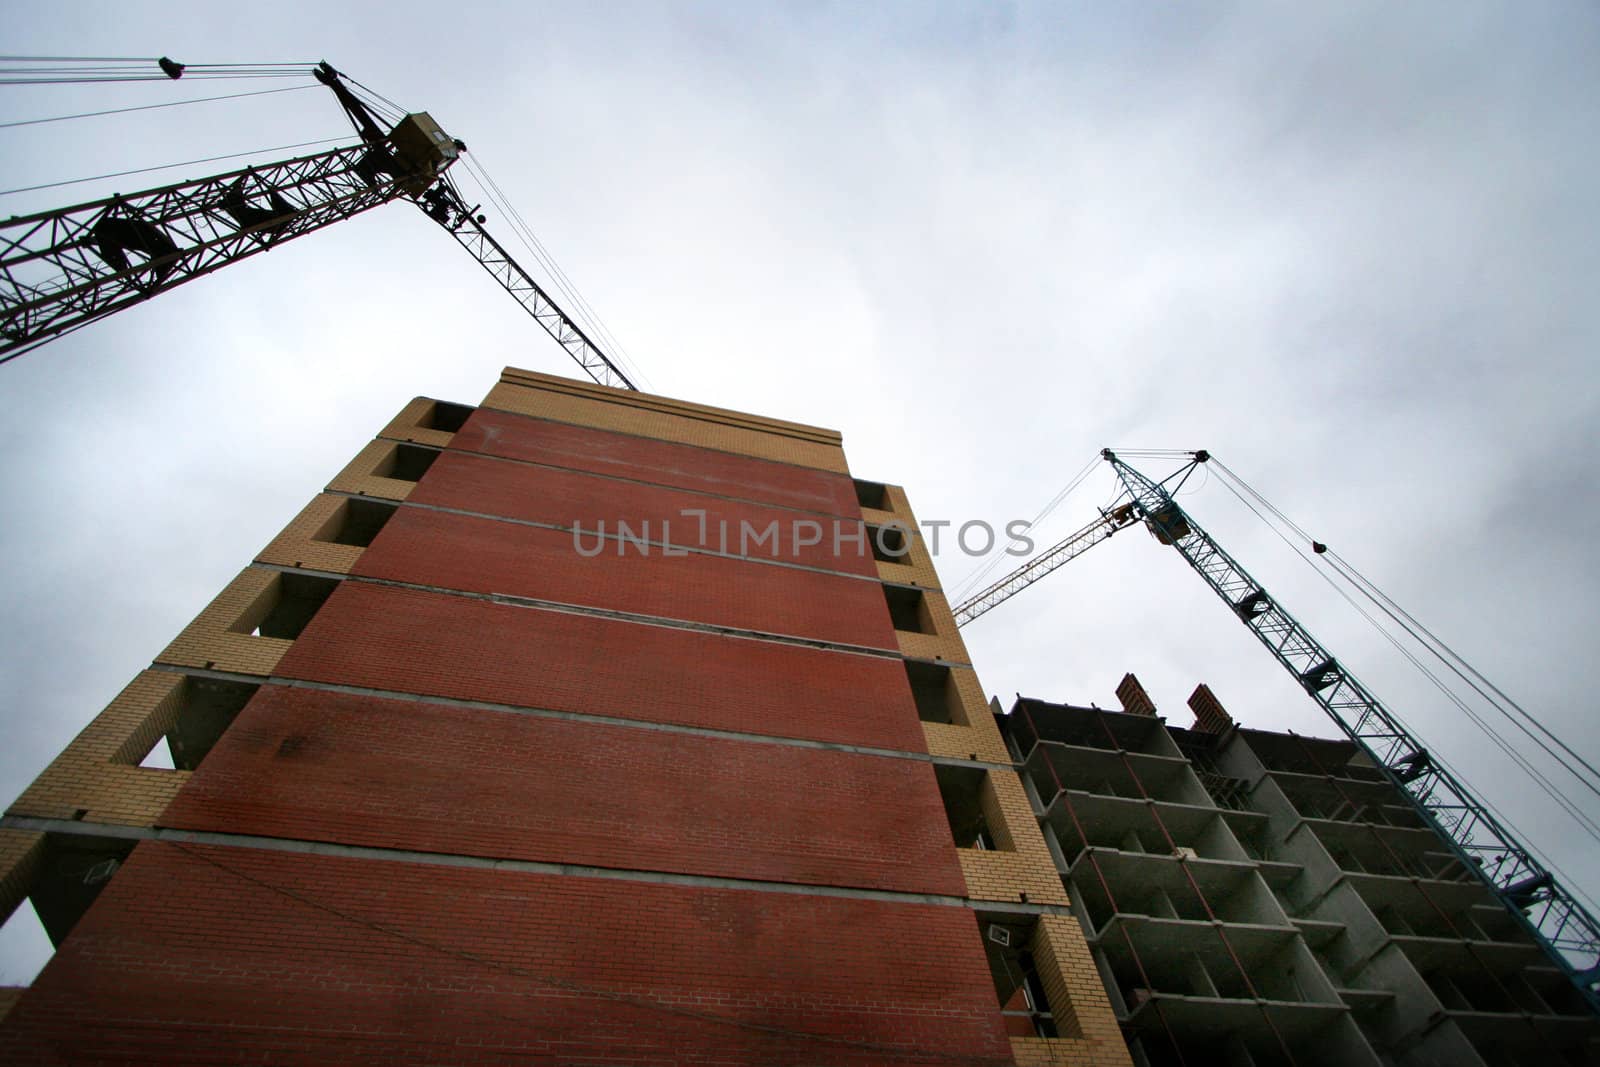 Elevating cranes build the brick house